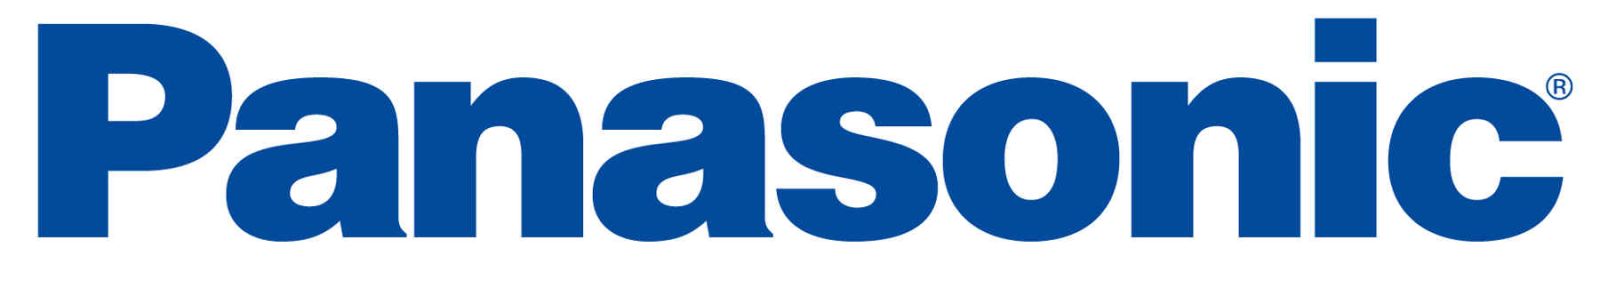 Caddebostan  Panasonic TV logo